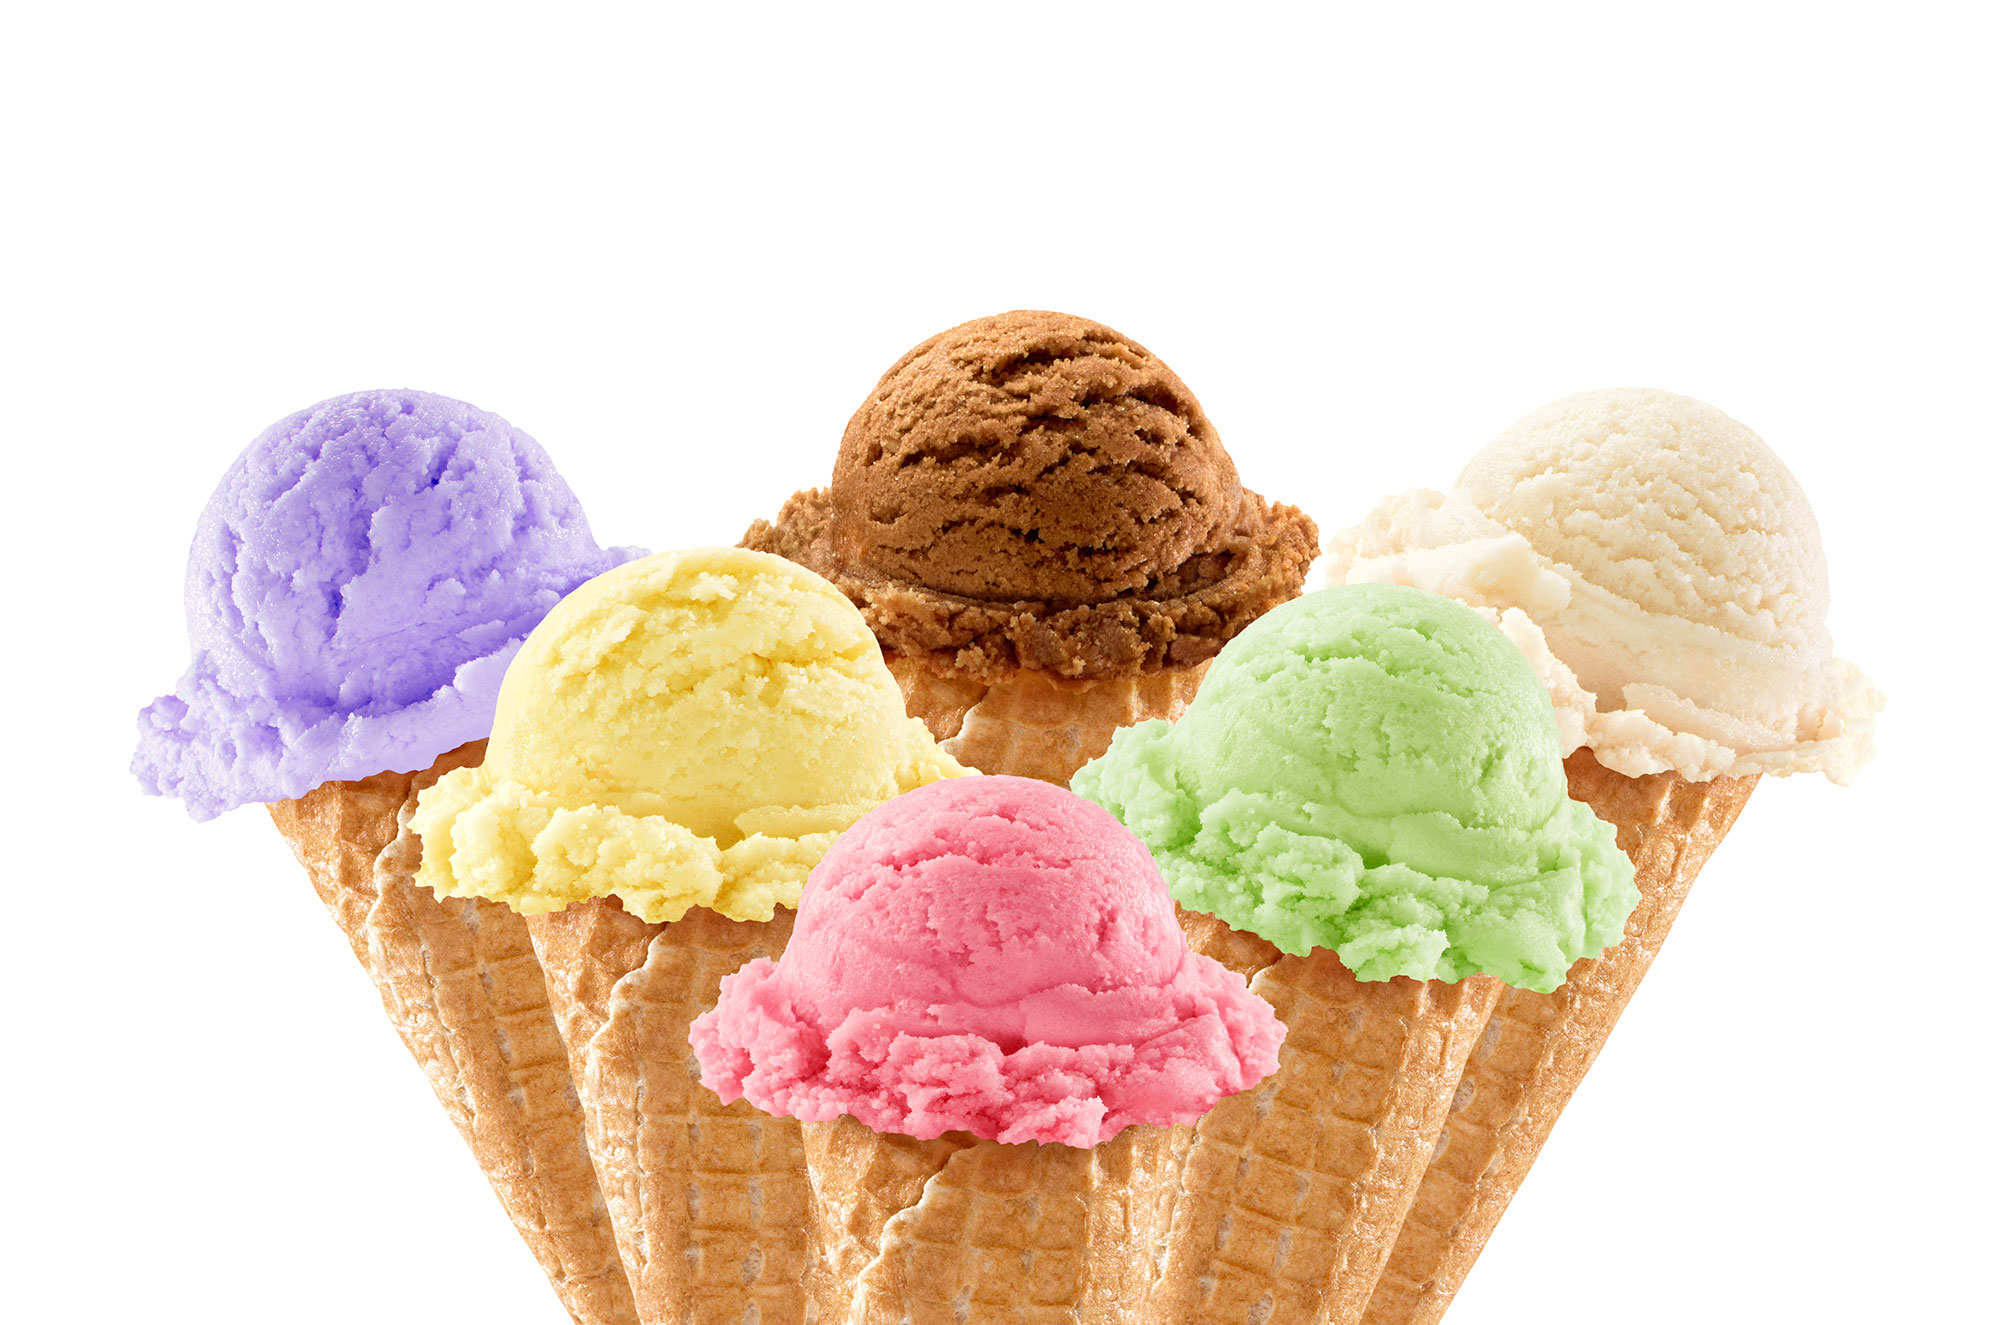 Ice Cream Flavor Selection